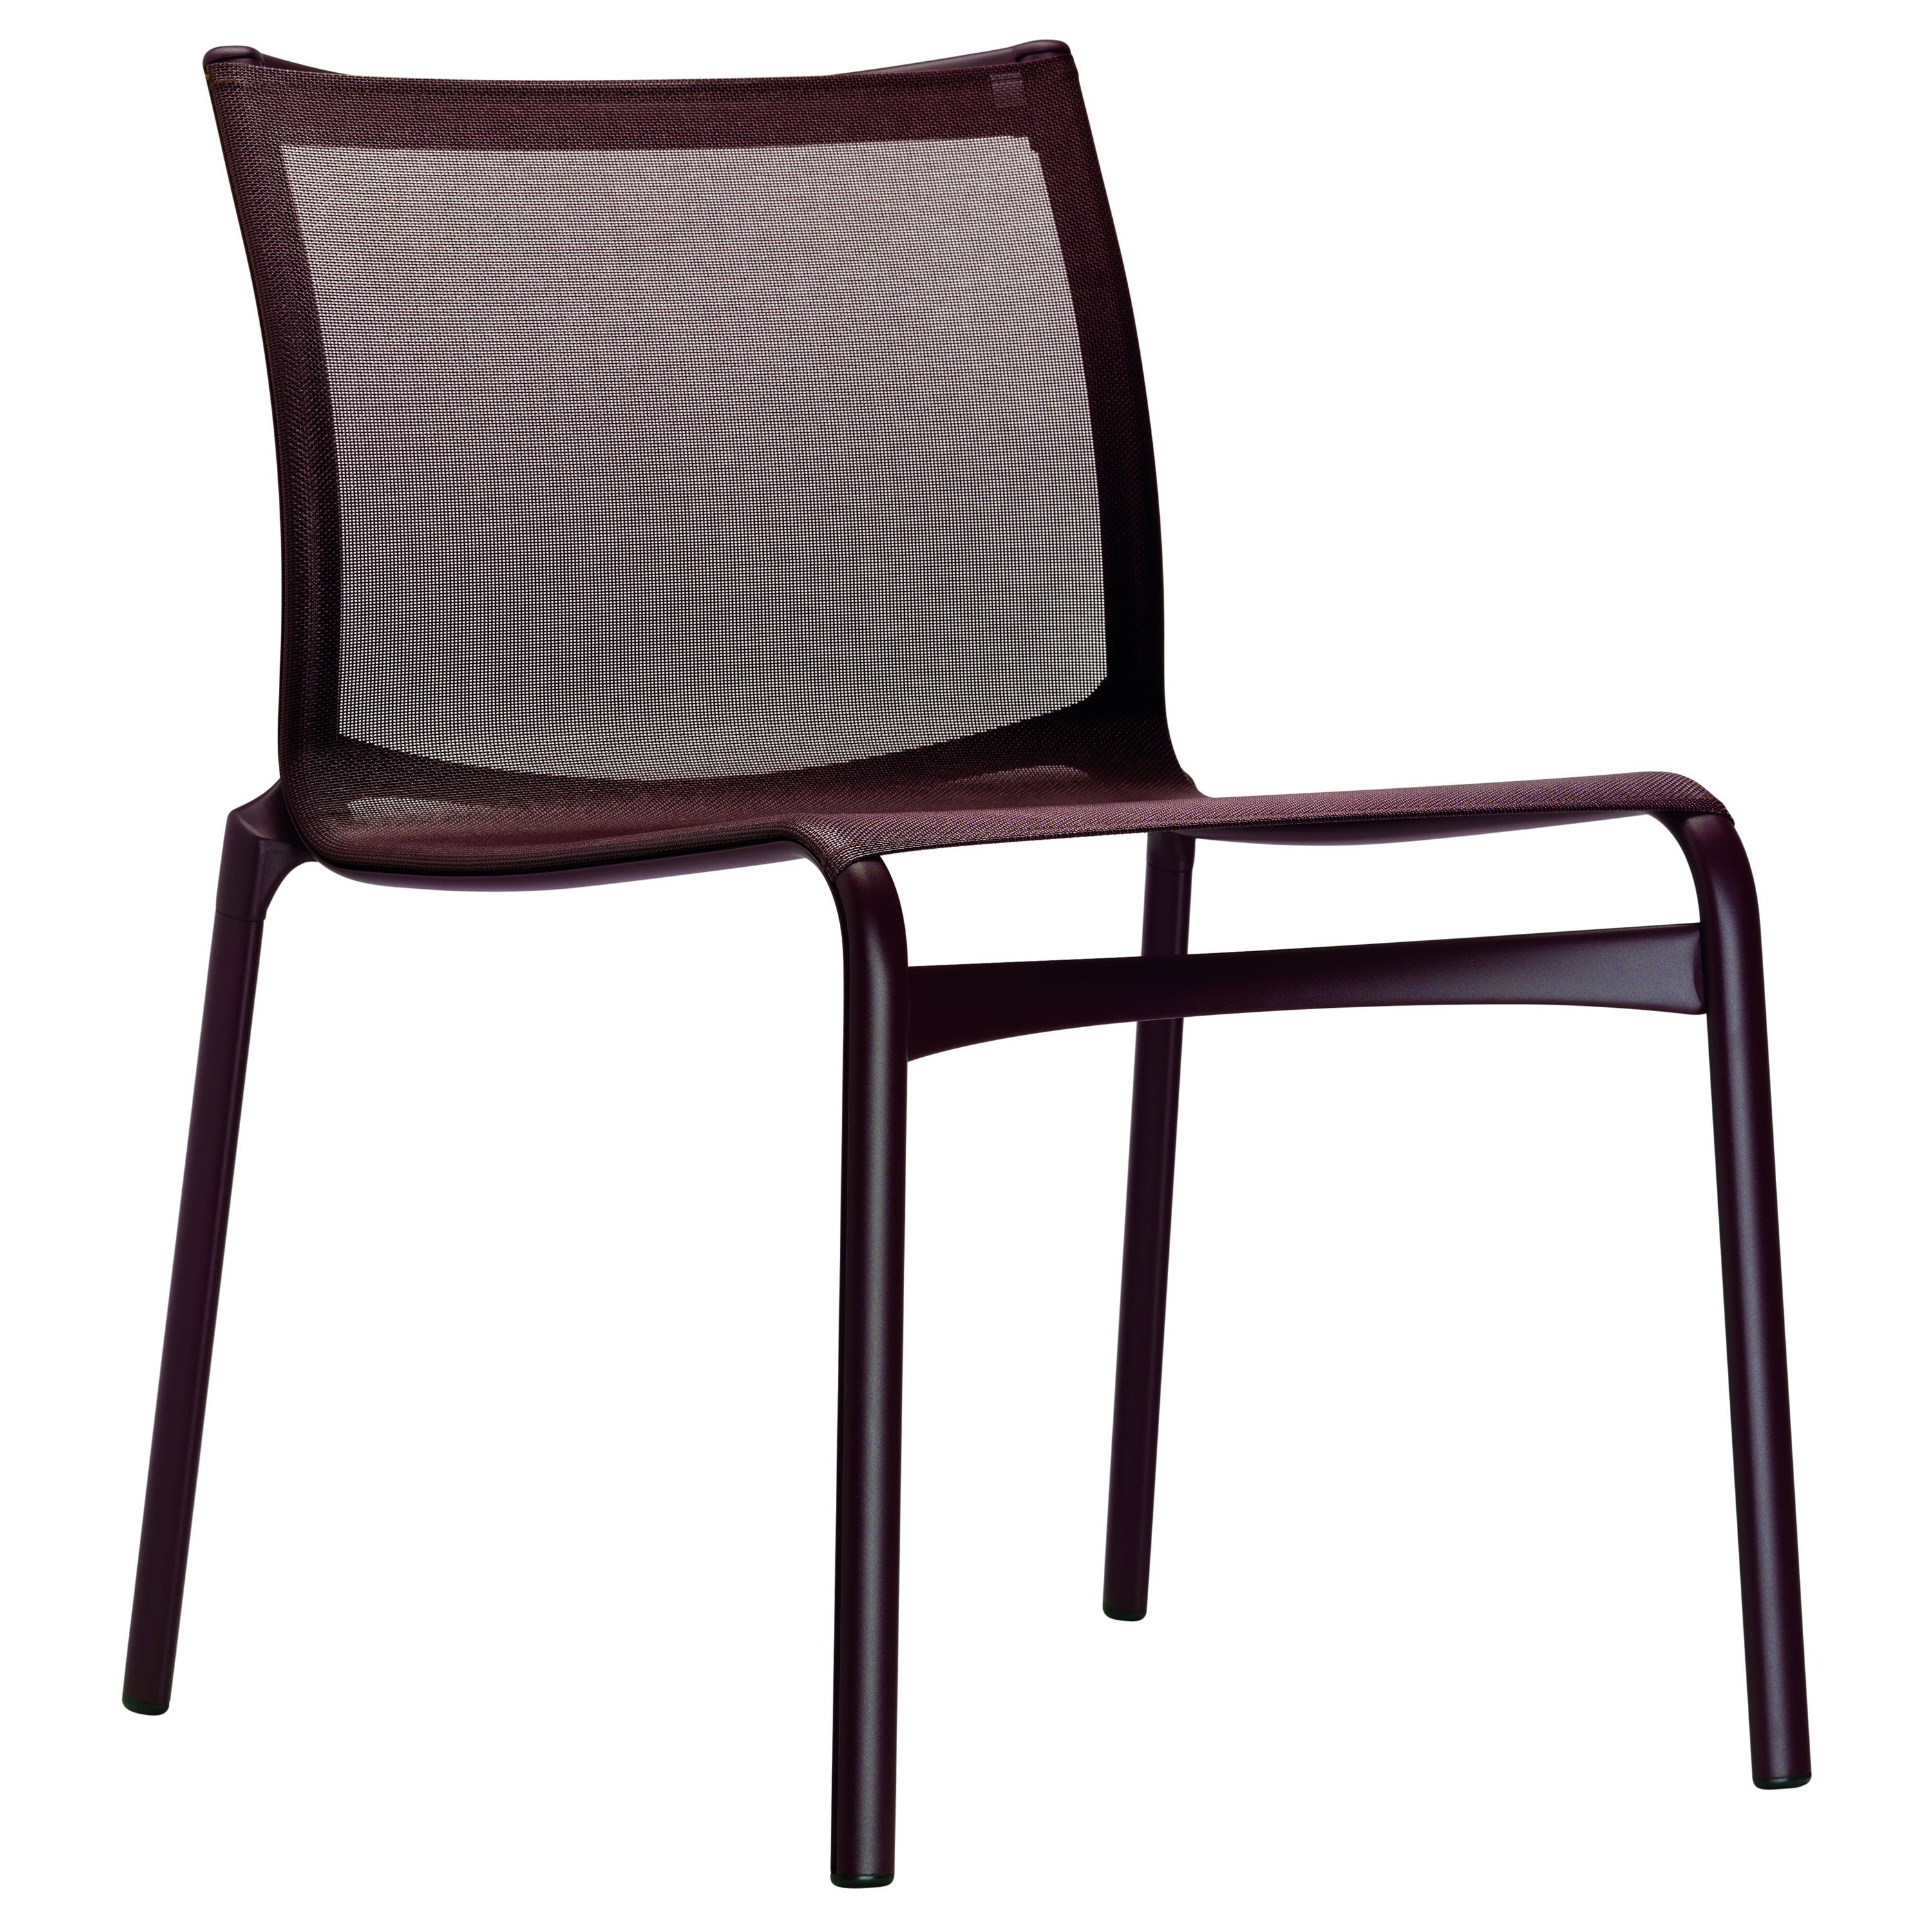 Alias Frame 52 Chair in Aubergine Mesh Seat with Lacquered Aluminium Frame